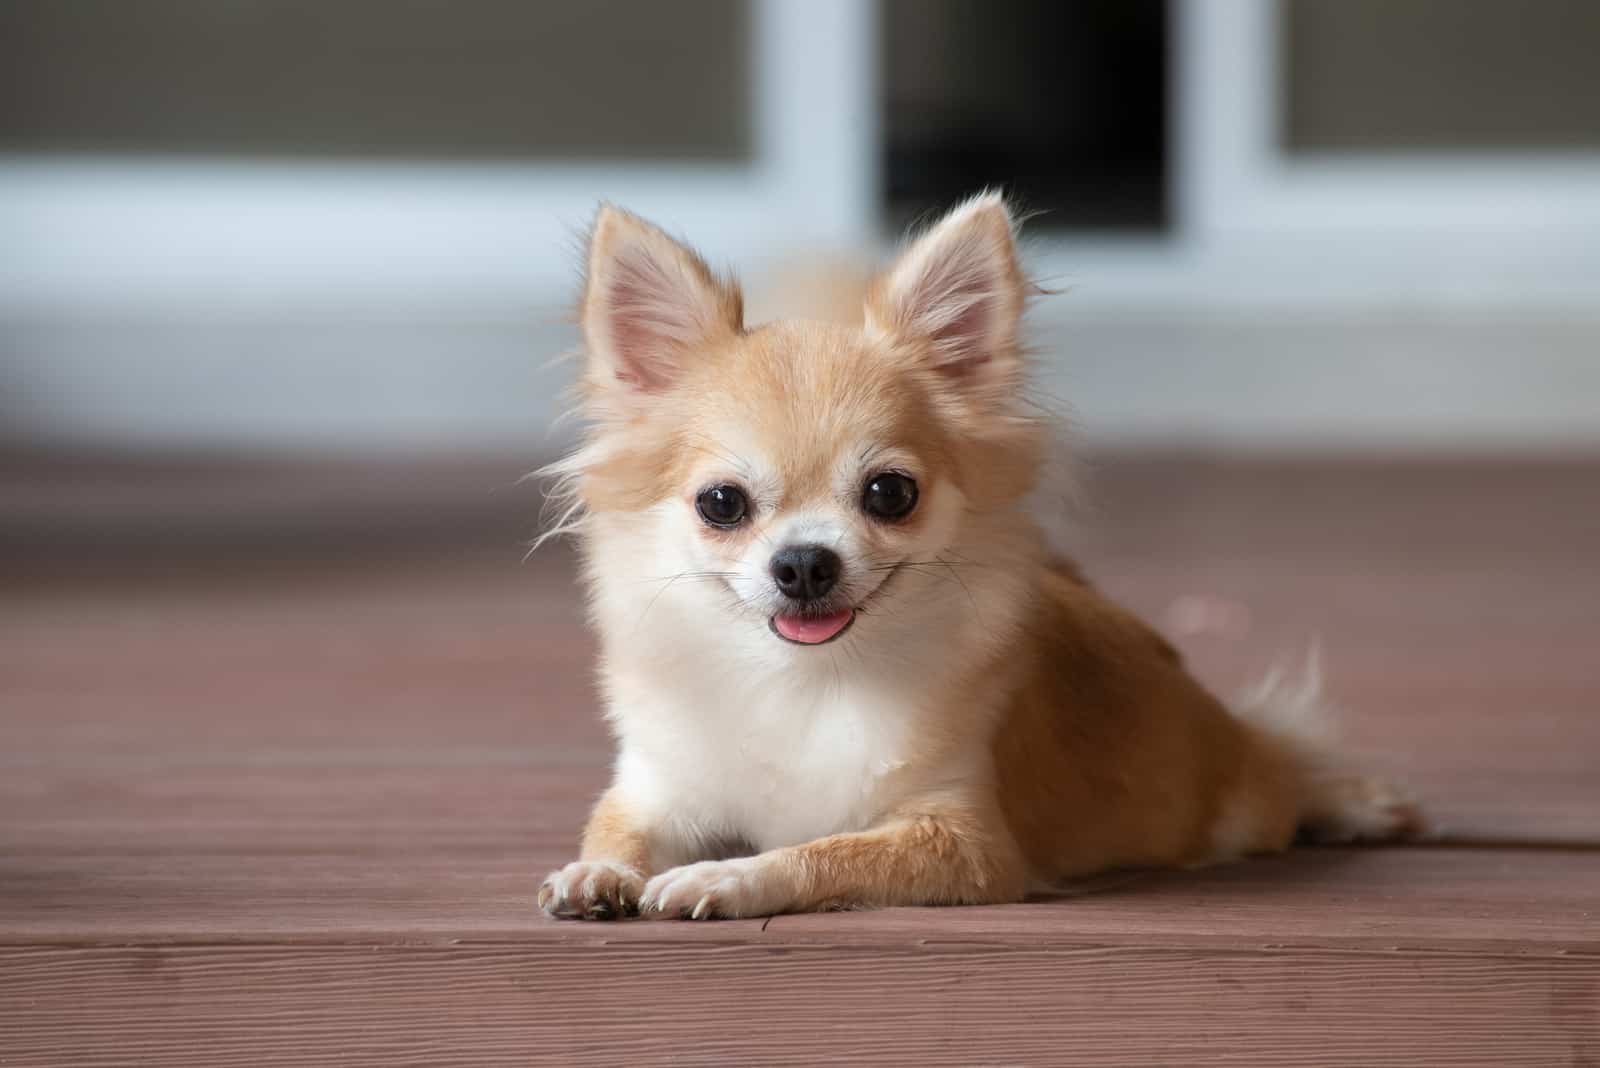 Chihuahua sitting on floor